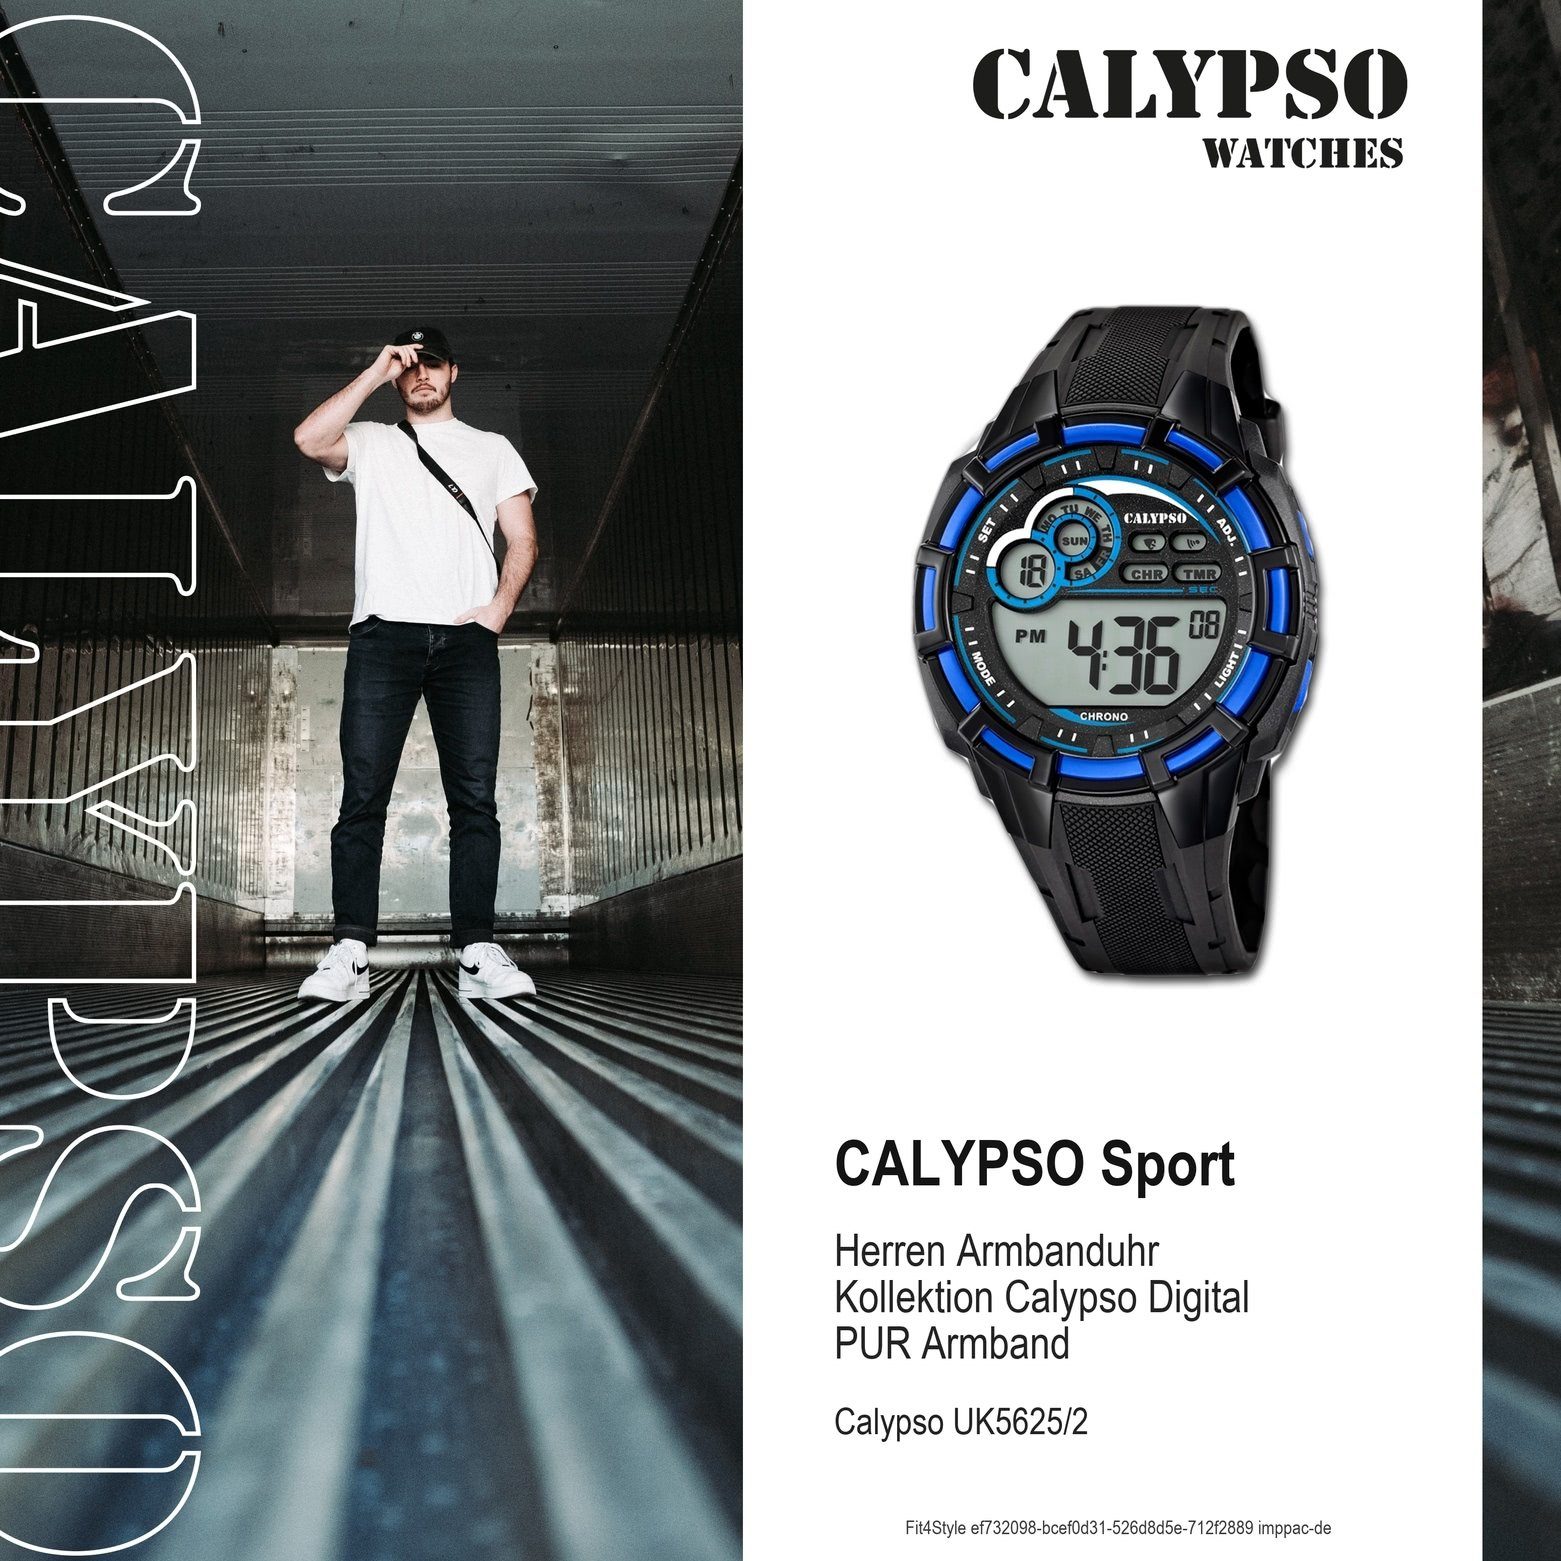 Herren Uhren CALYPSO WATCHES Digitaluhr UK5625/2 Calypso Herren Uhr K5625/2 Kunststoffband, Herren Armbanduhr rund, PURarmband s